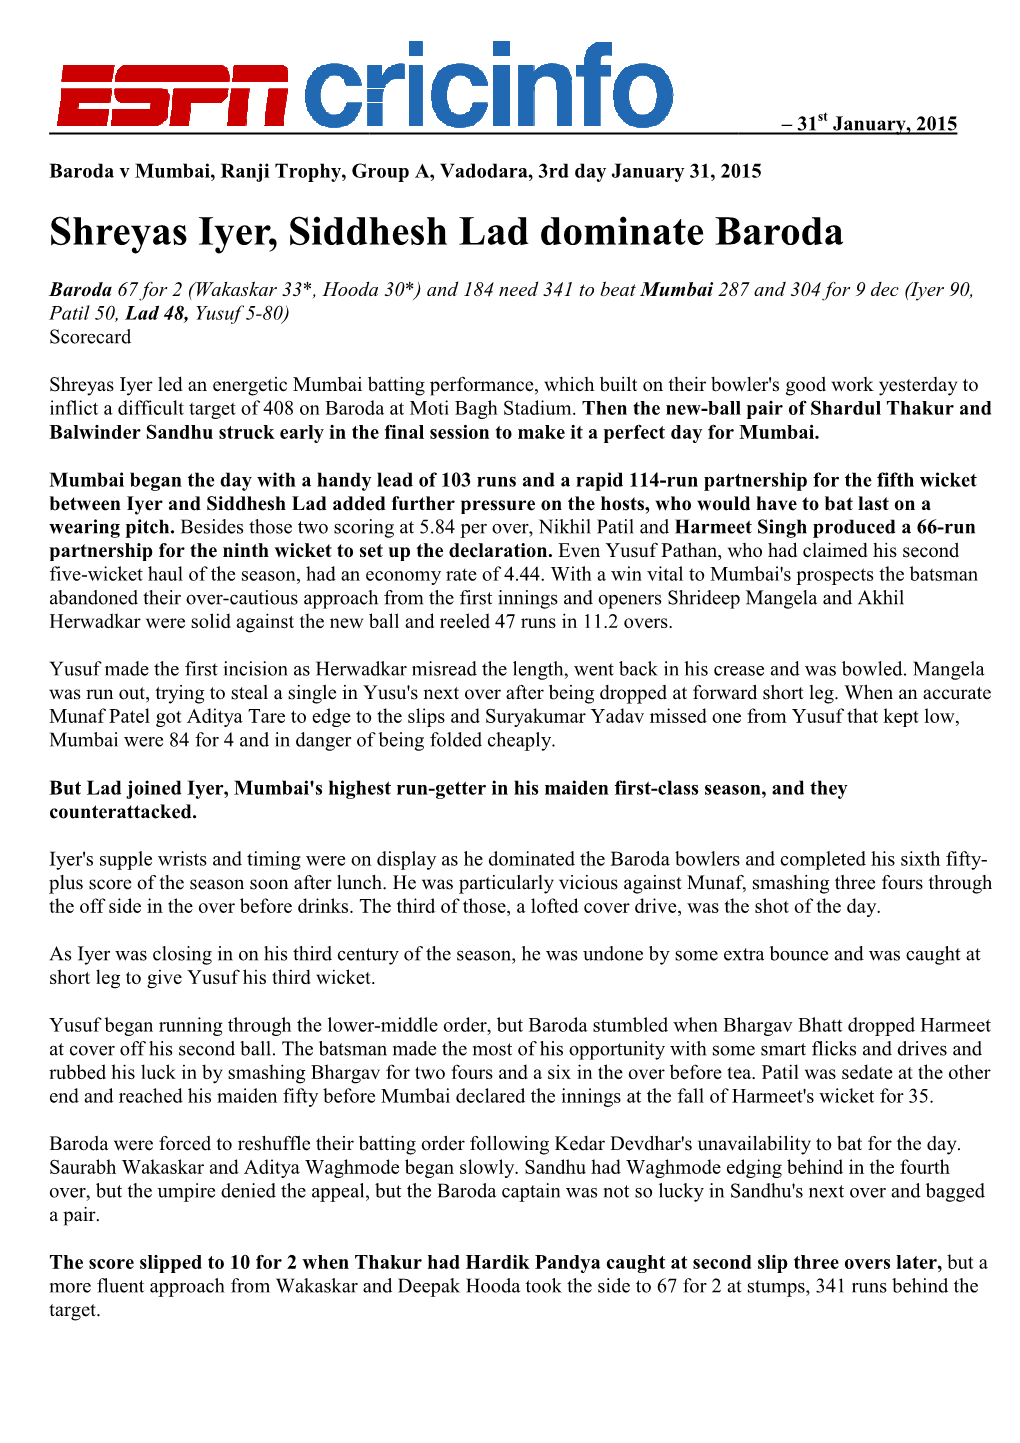 Shreyas Iyer, Siddhesh Lad Siddhesh Lad Dominate Baroda Dominate